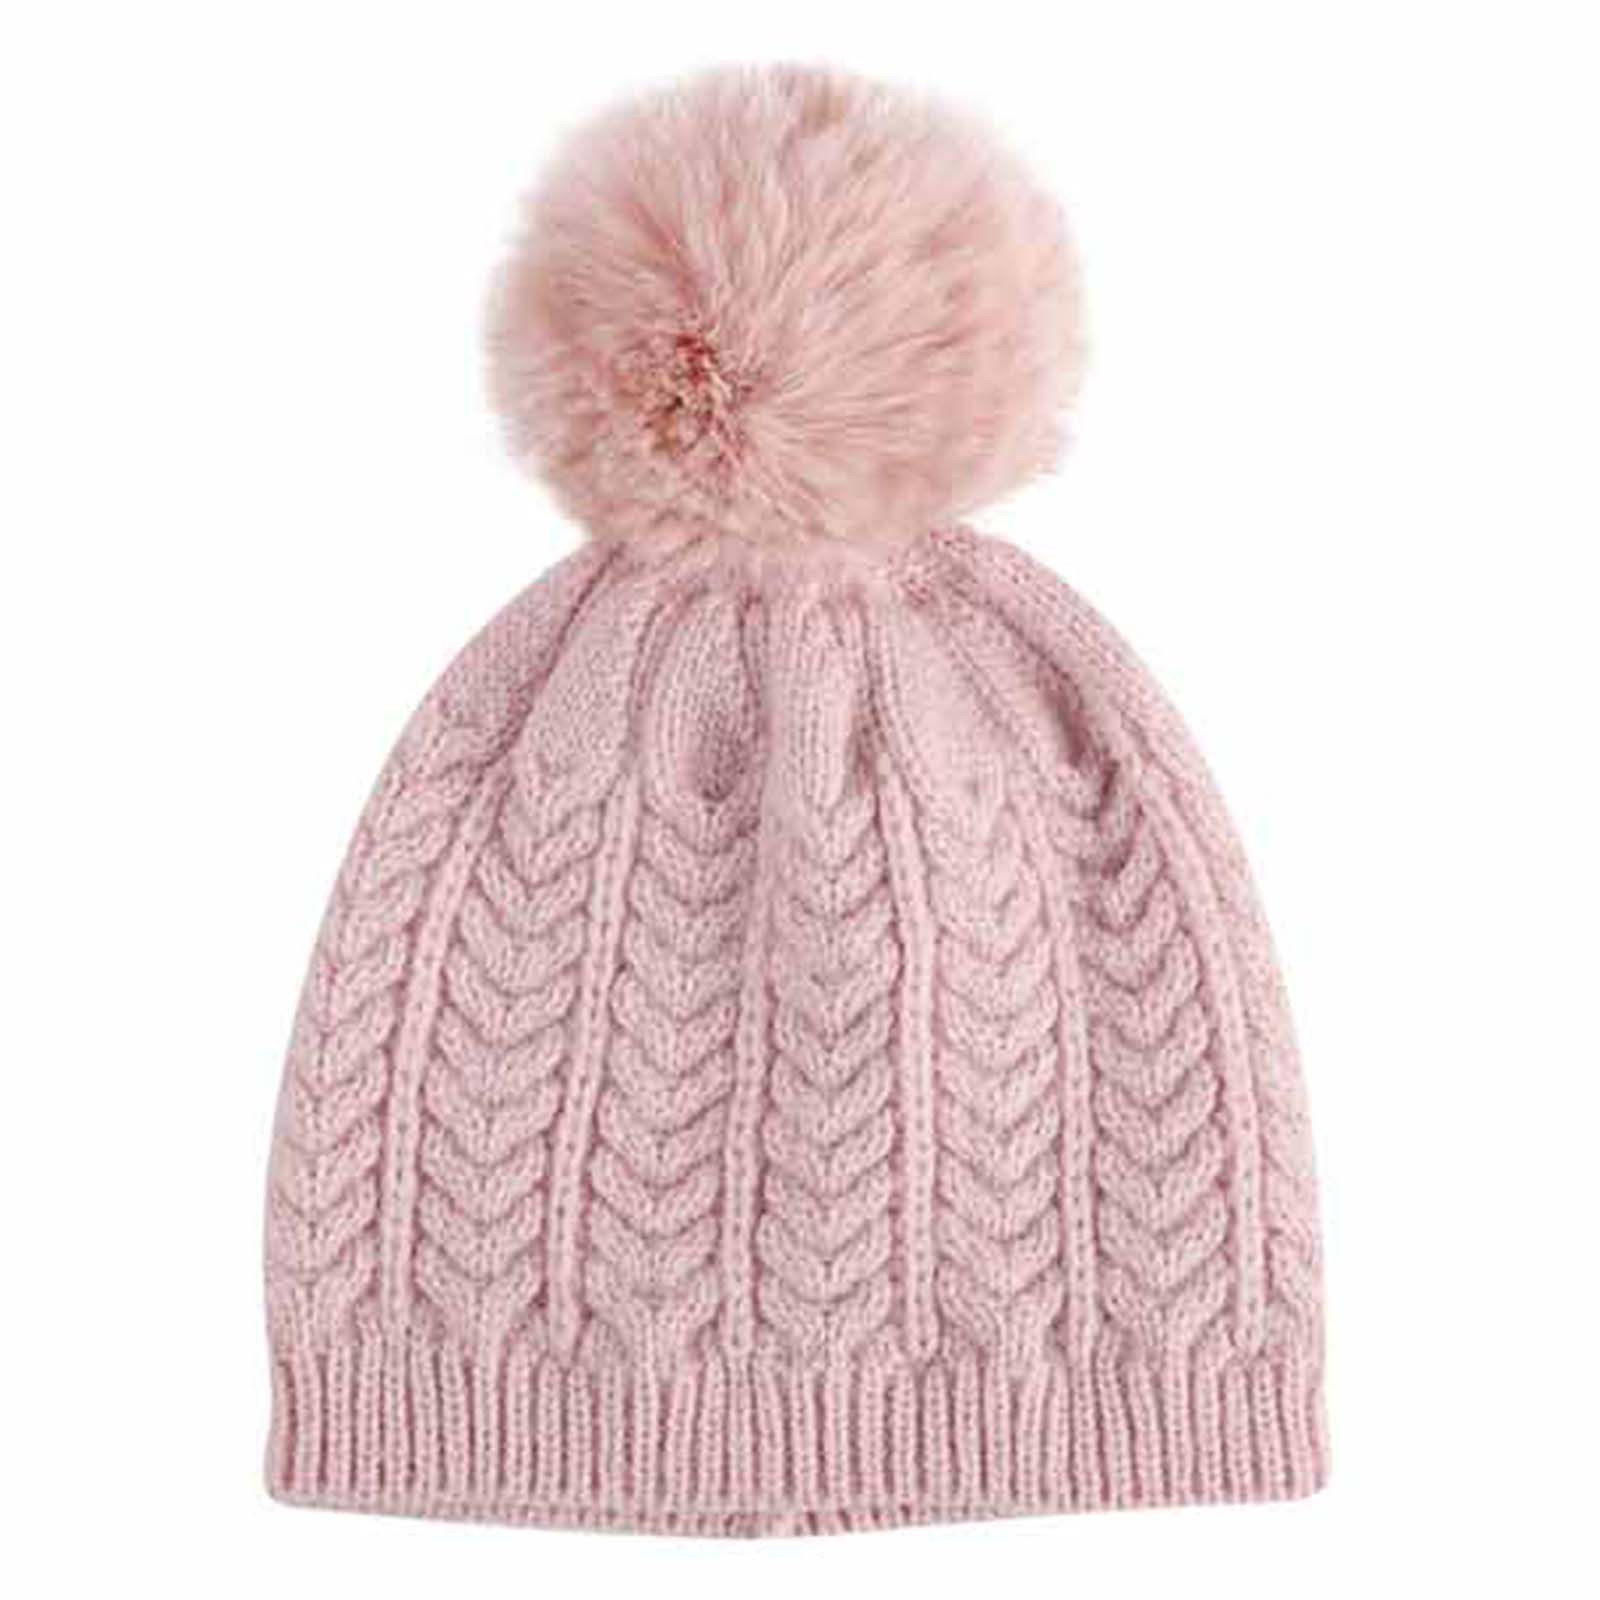 Lolmot Newborn Toddler Kids Winter Warm Fleece Beanie Hats Thick Warm Pompom Crochet Hairball Knit Cap - image 3 of 3